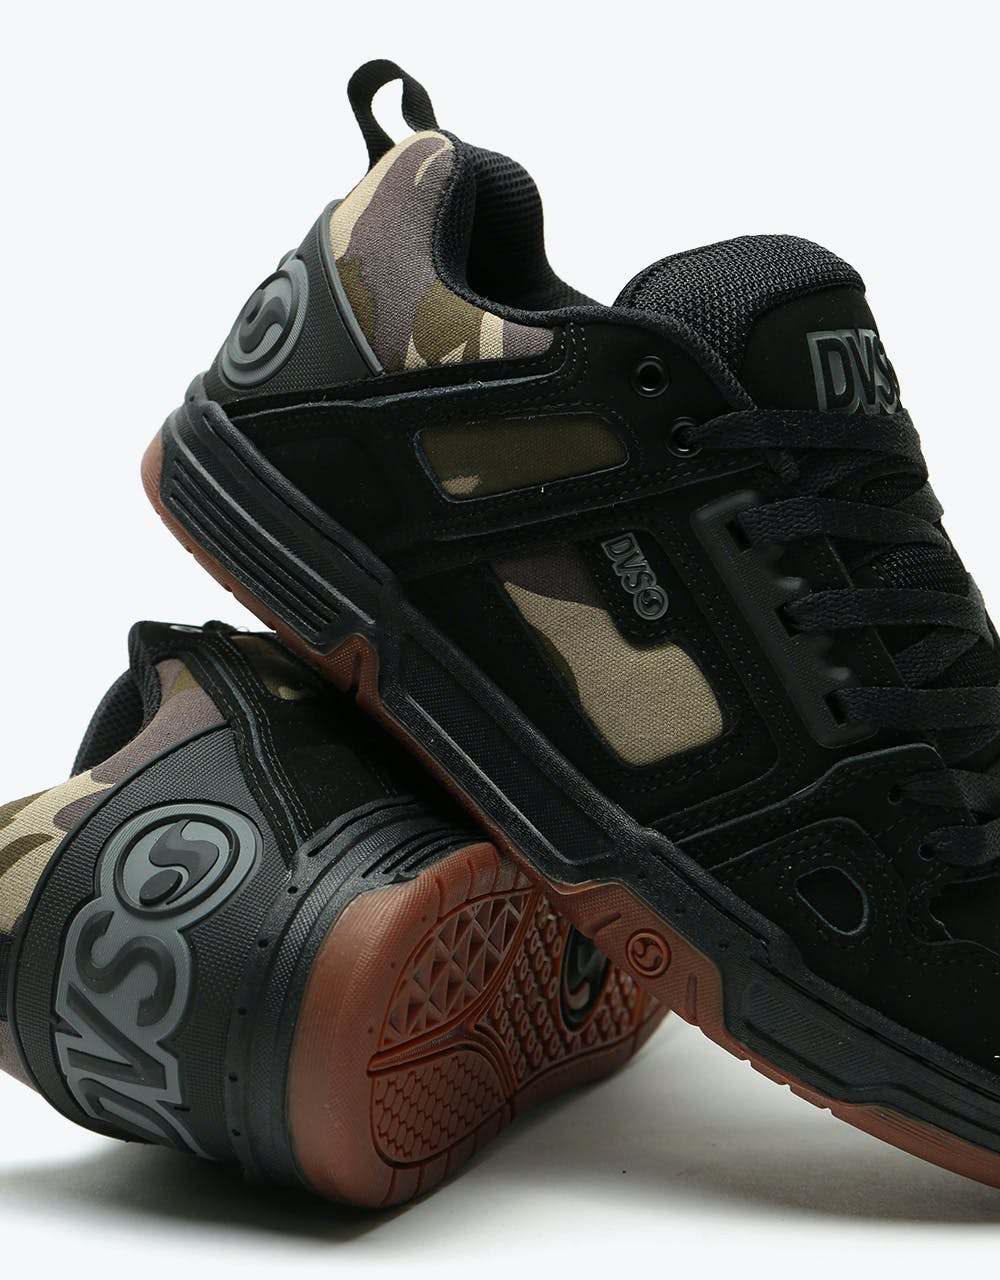 Dvs Comanche Skate Shoes Black Camo Nubuck